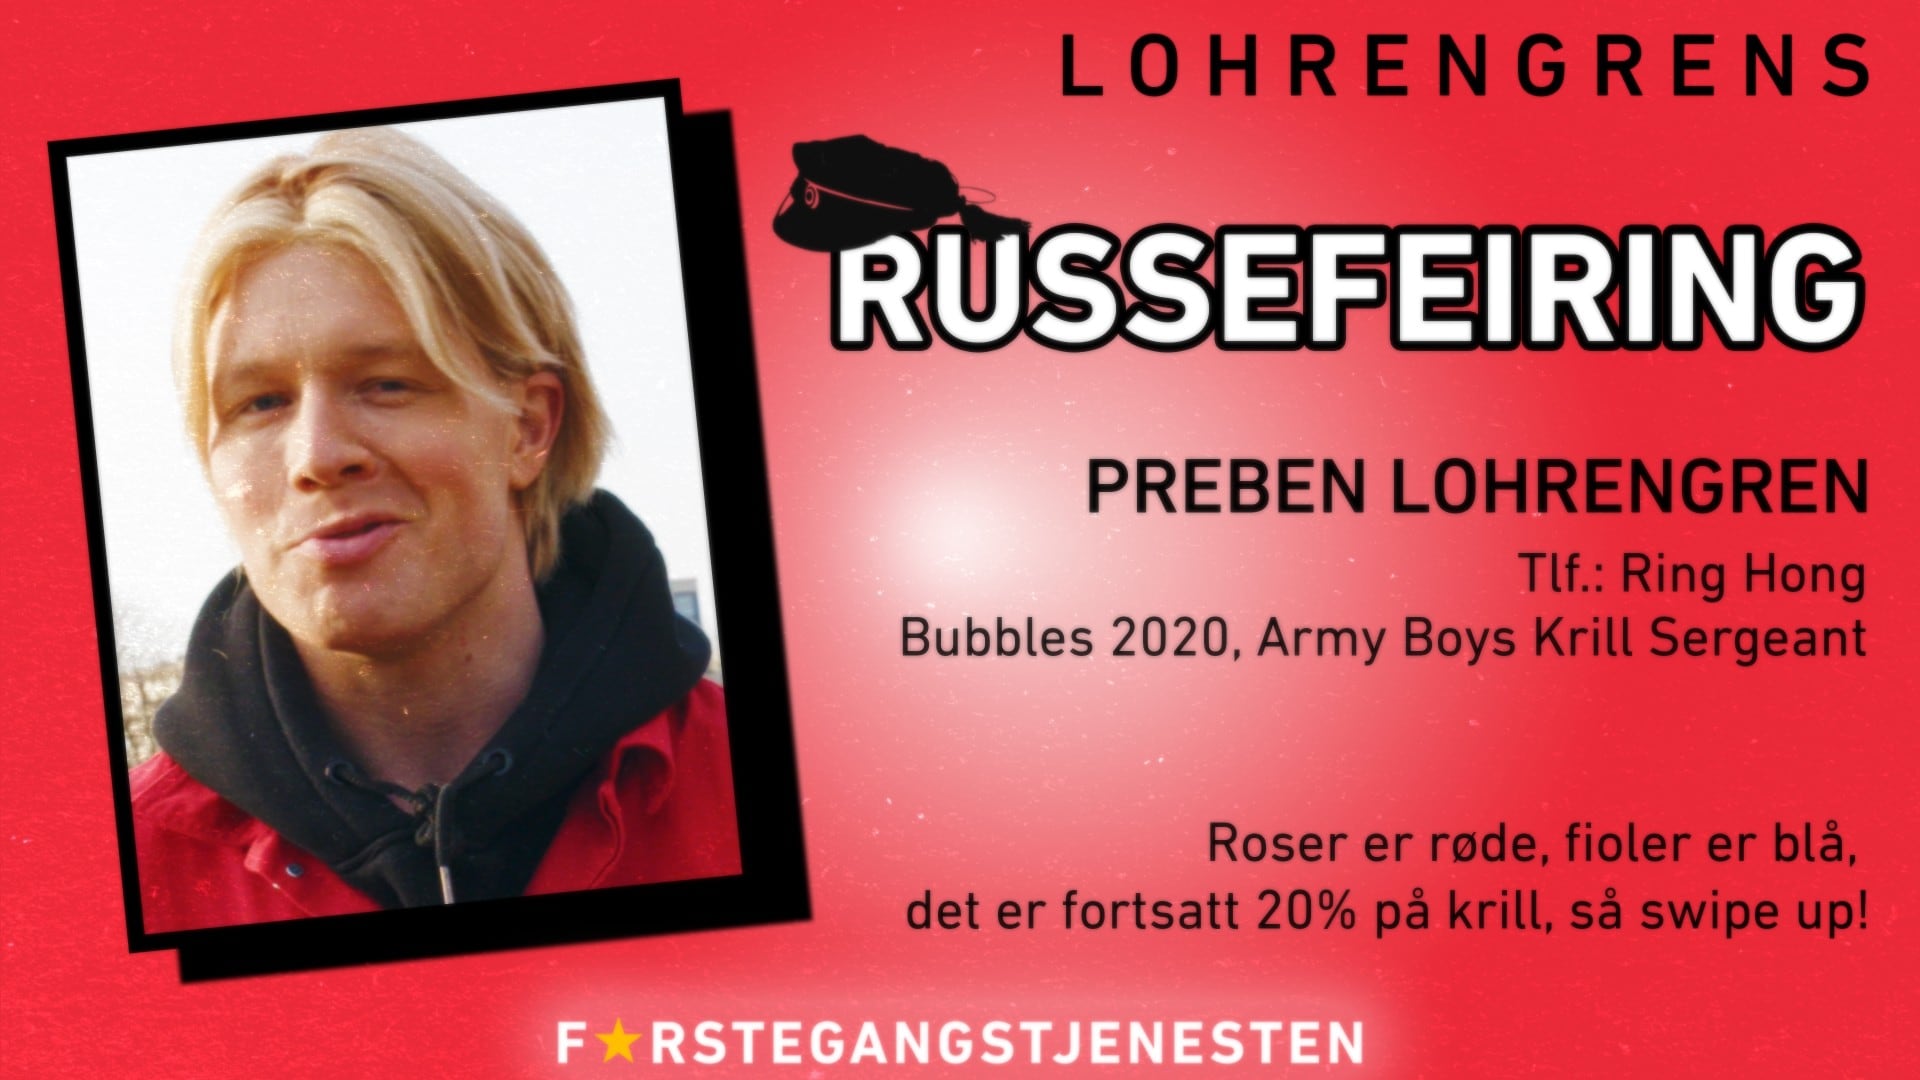 BONUS: Lohrengrens russefeiring.